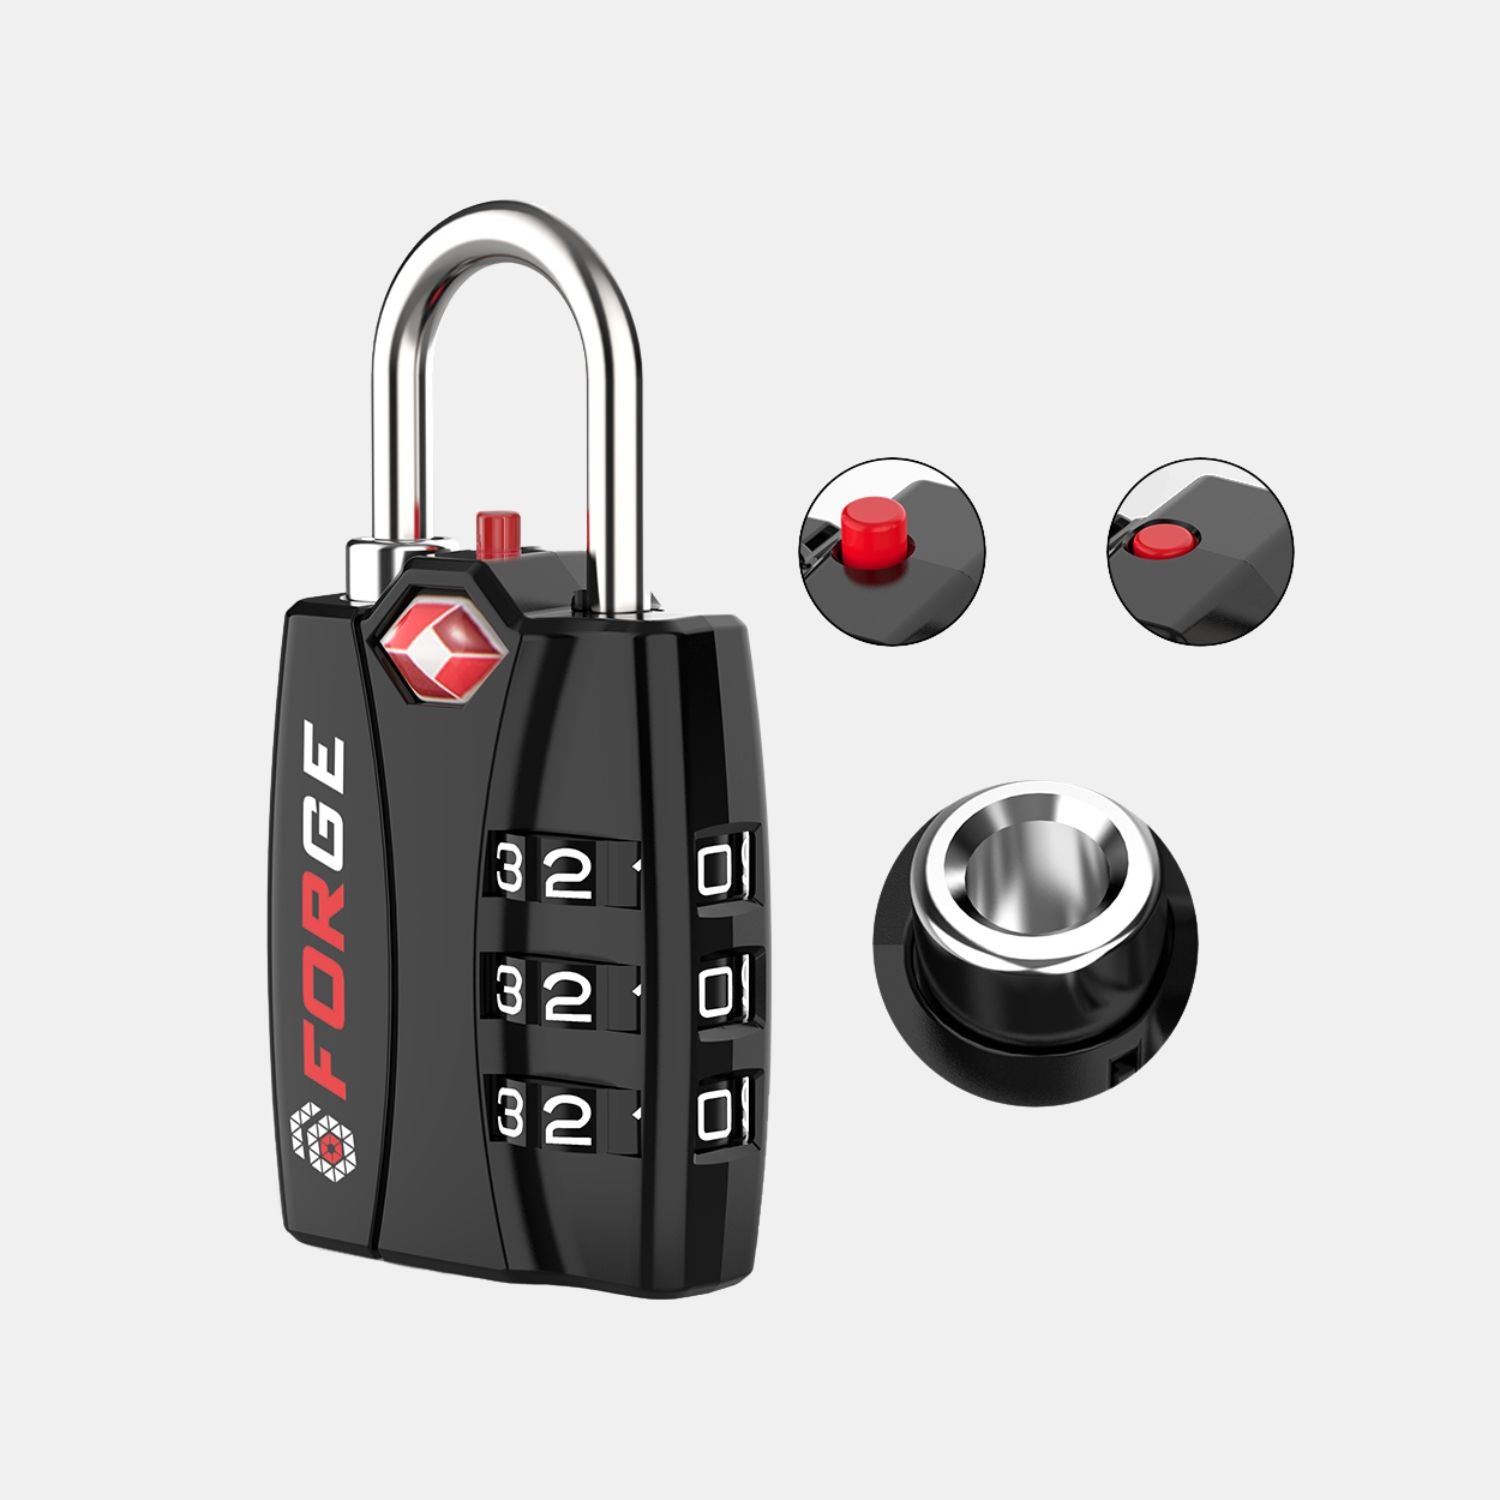 TSA-Approved Luggage Locks: 3-Digit Combination, Open Alert Indicator, Matt Black 2 Locks